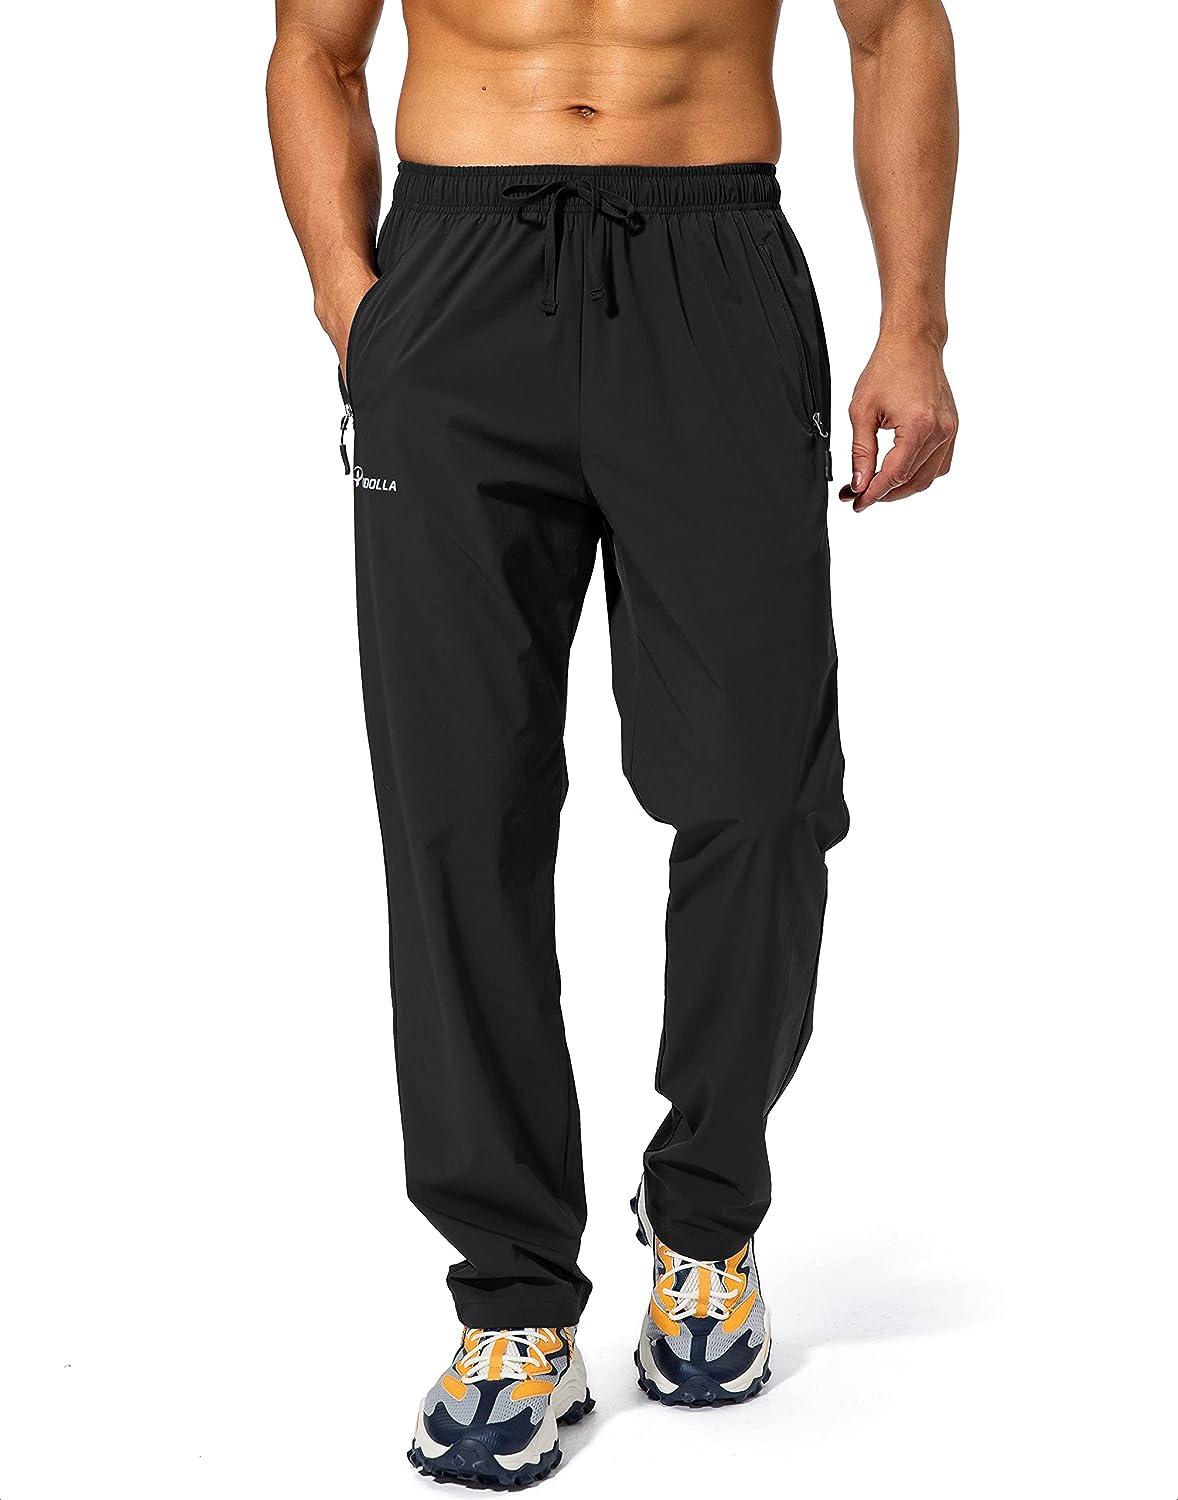 Men's Sweatpants with Zipper Pockets Elastic Bottom Cargo Fitness  Bodybuilding Workout Pants Outdoor Track Pants